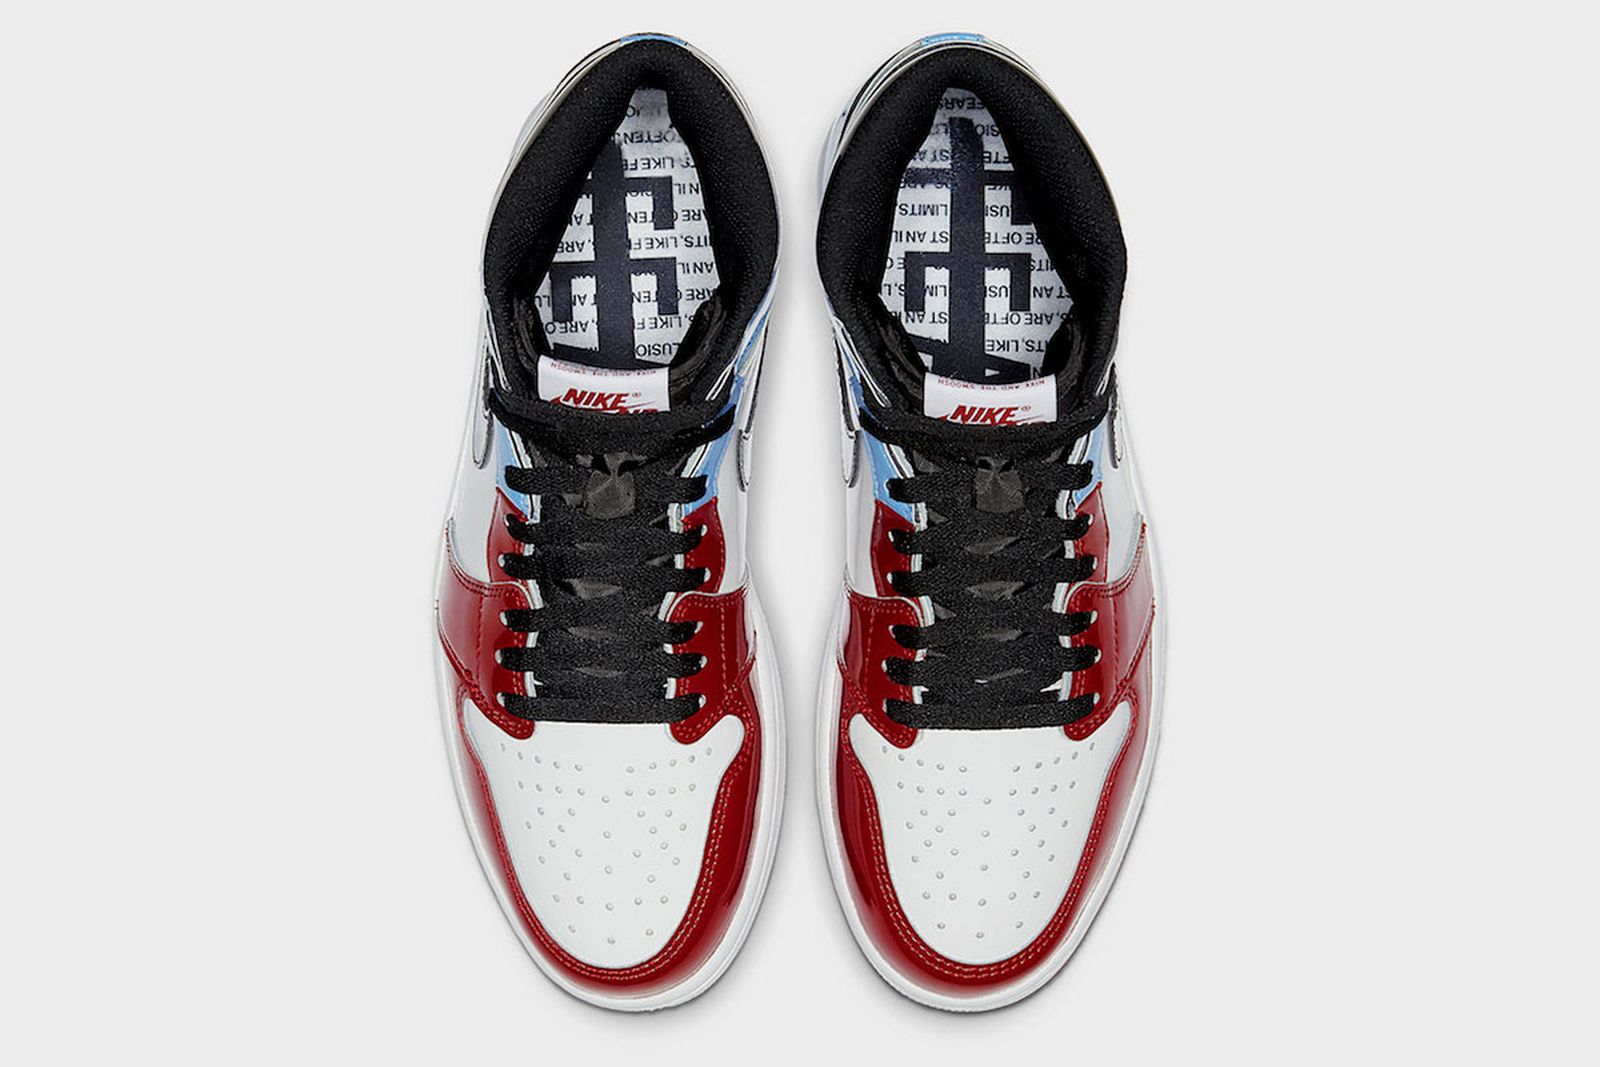 Nike Air jordan 1 fearless Jordan 1 "Fearless" Patent Leather: Release Info